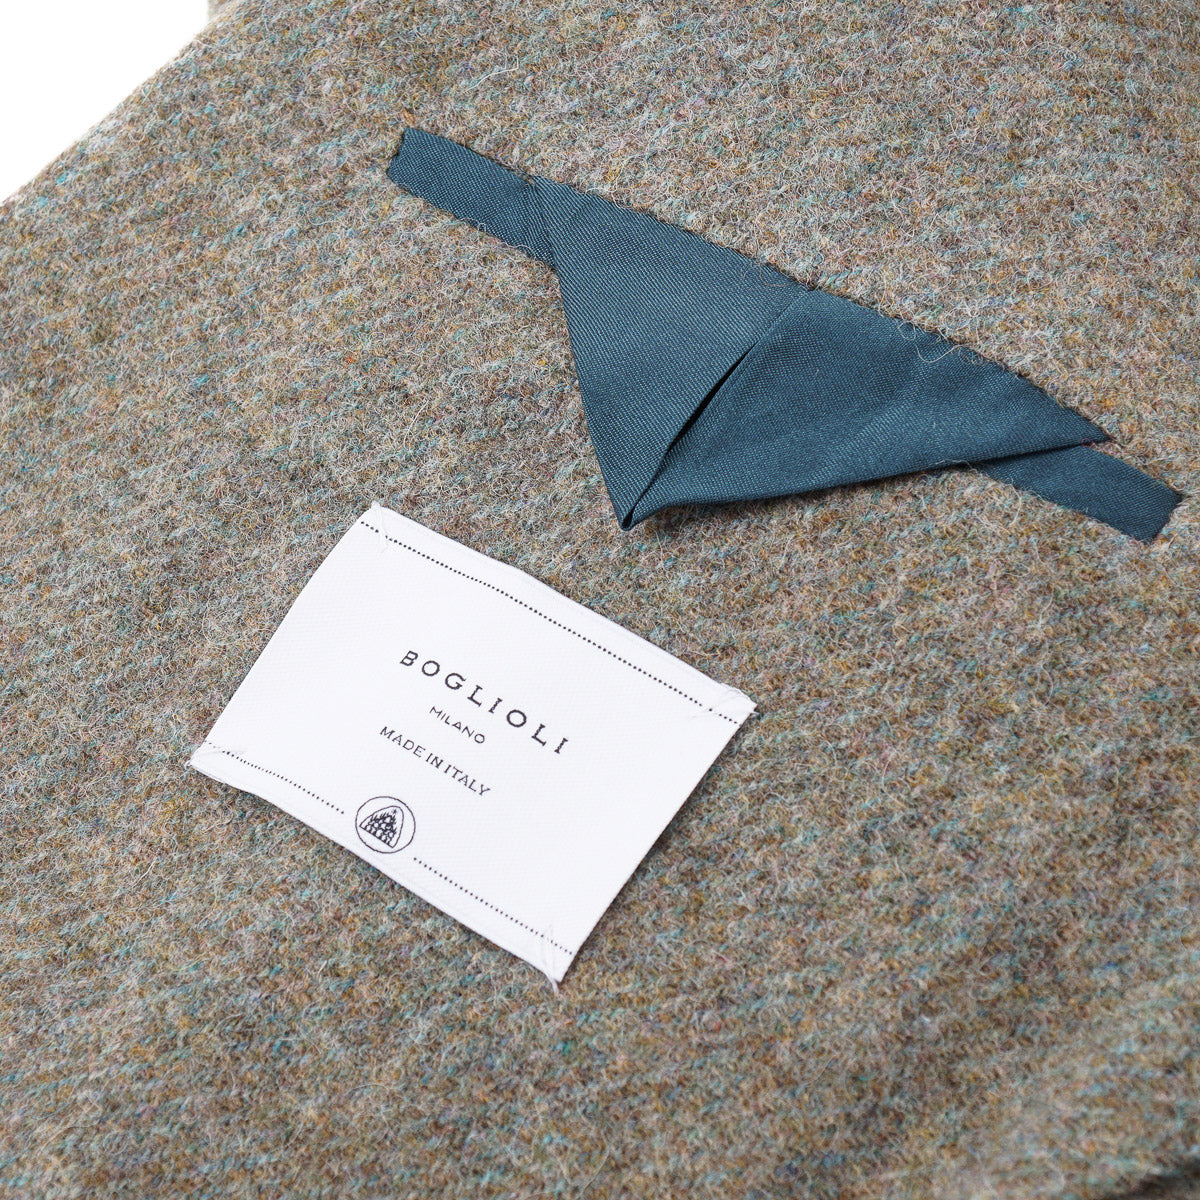 Boglioli Tweed Wool 'K Jacket' Sport Coat - Top Shelf Apparel